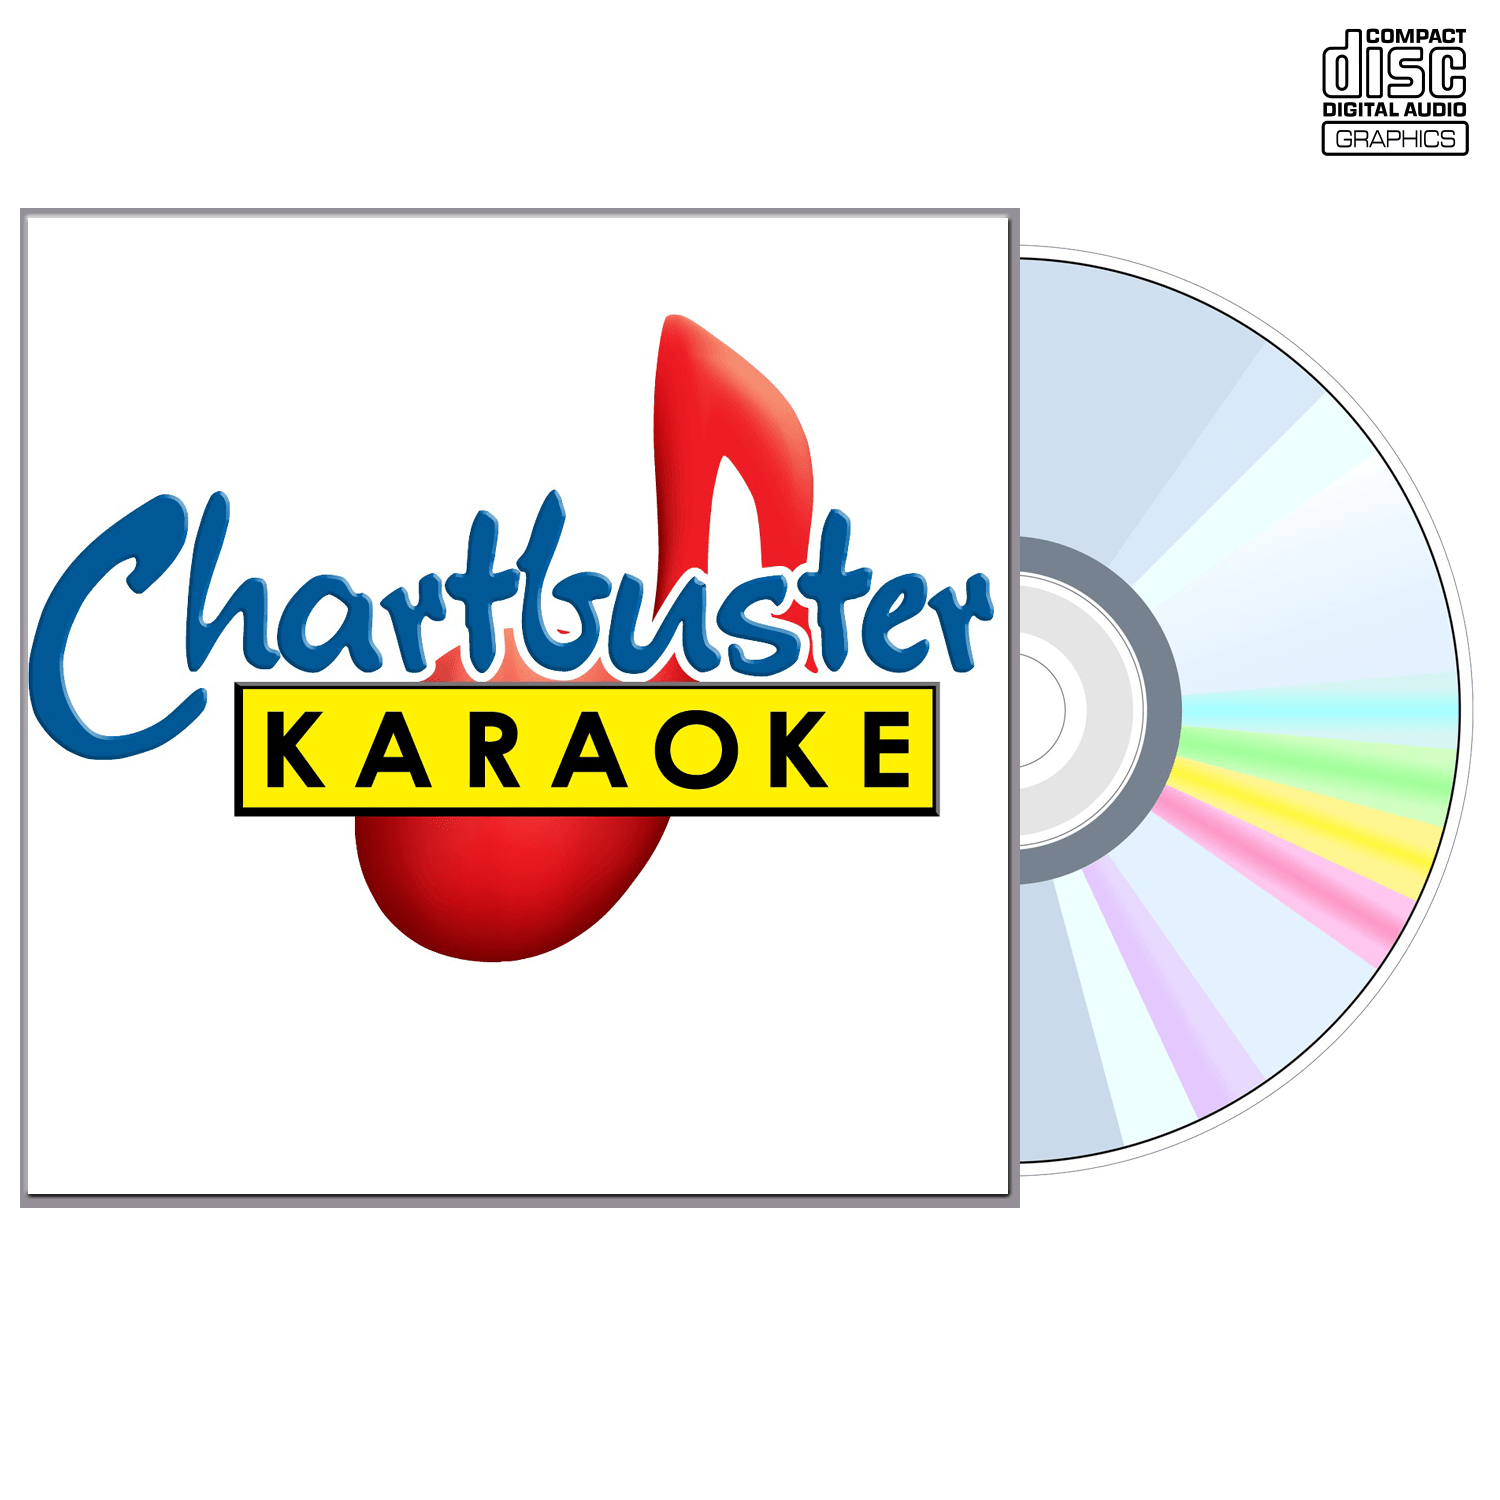 New Kids On The Block - CD+G - Chartbuster Karaoke - Karaoke Home Entertainment